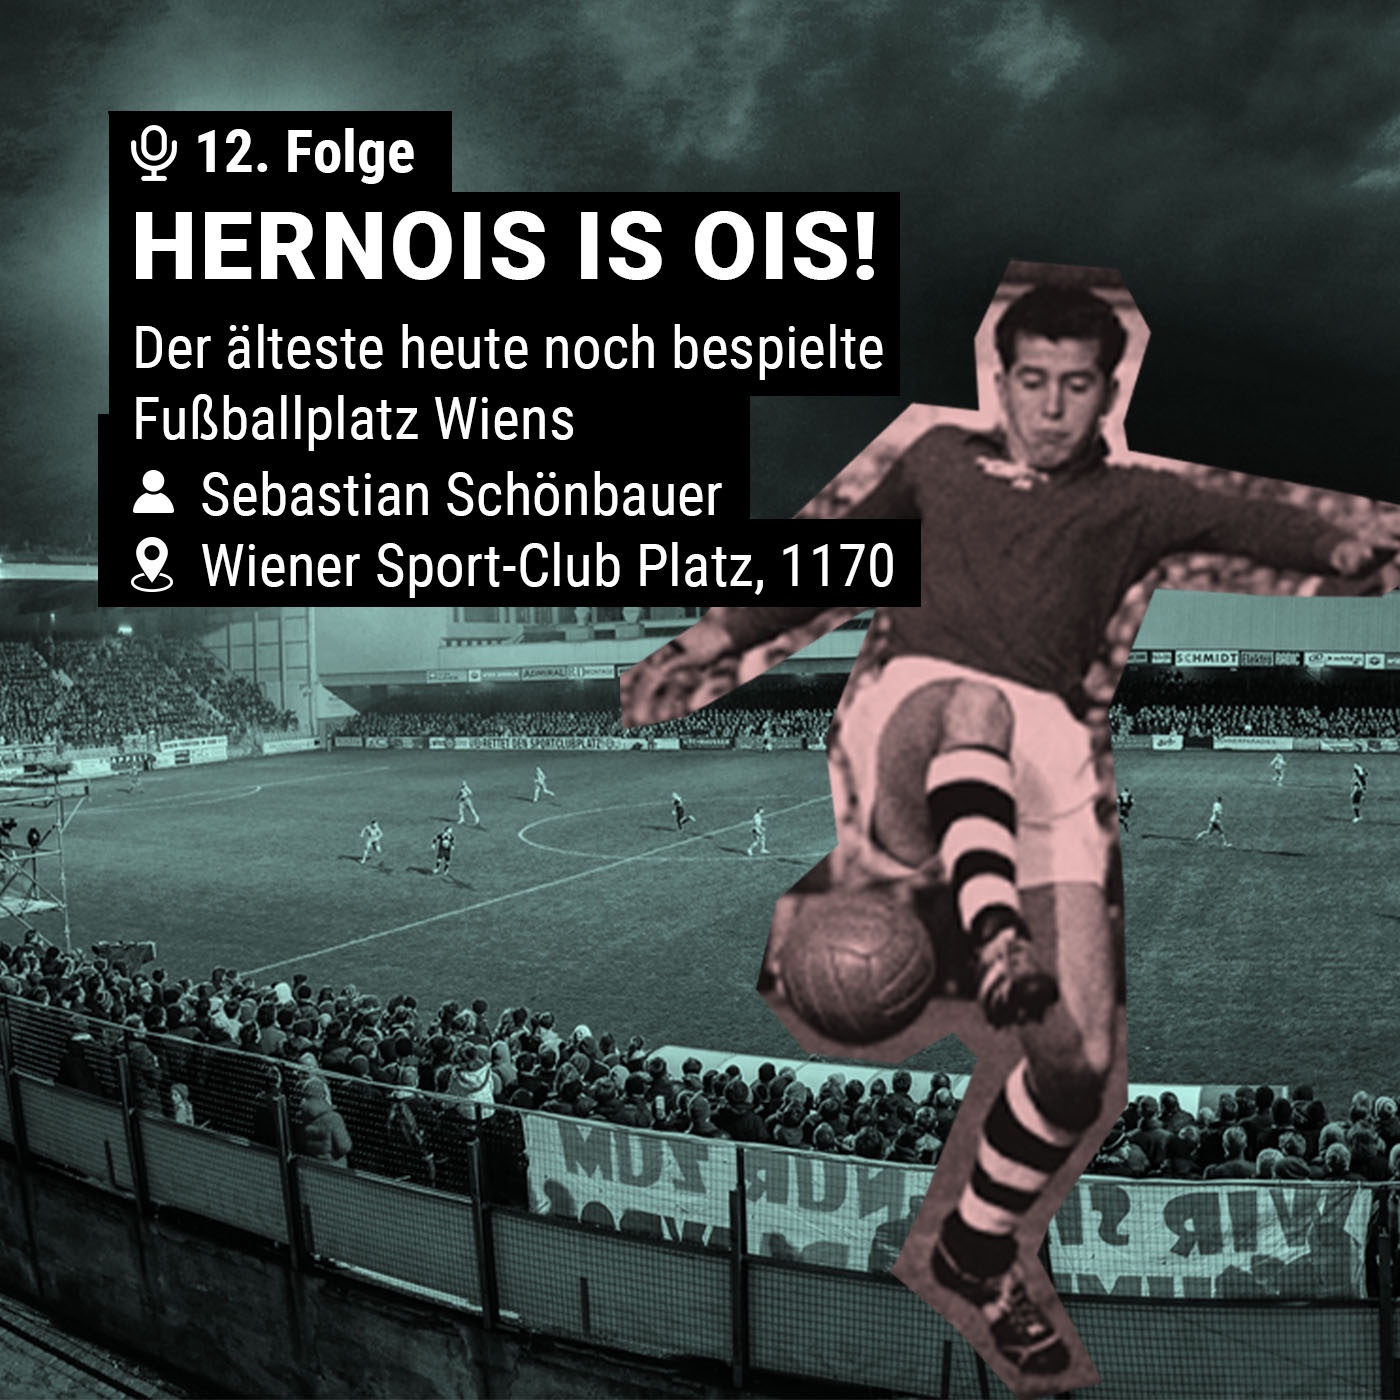 Heanois is ois! - Der Wiener Sport-Club